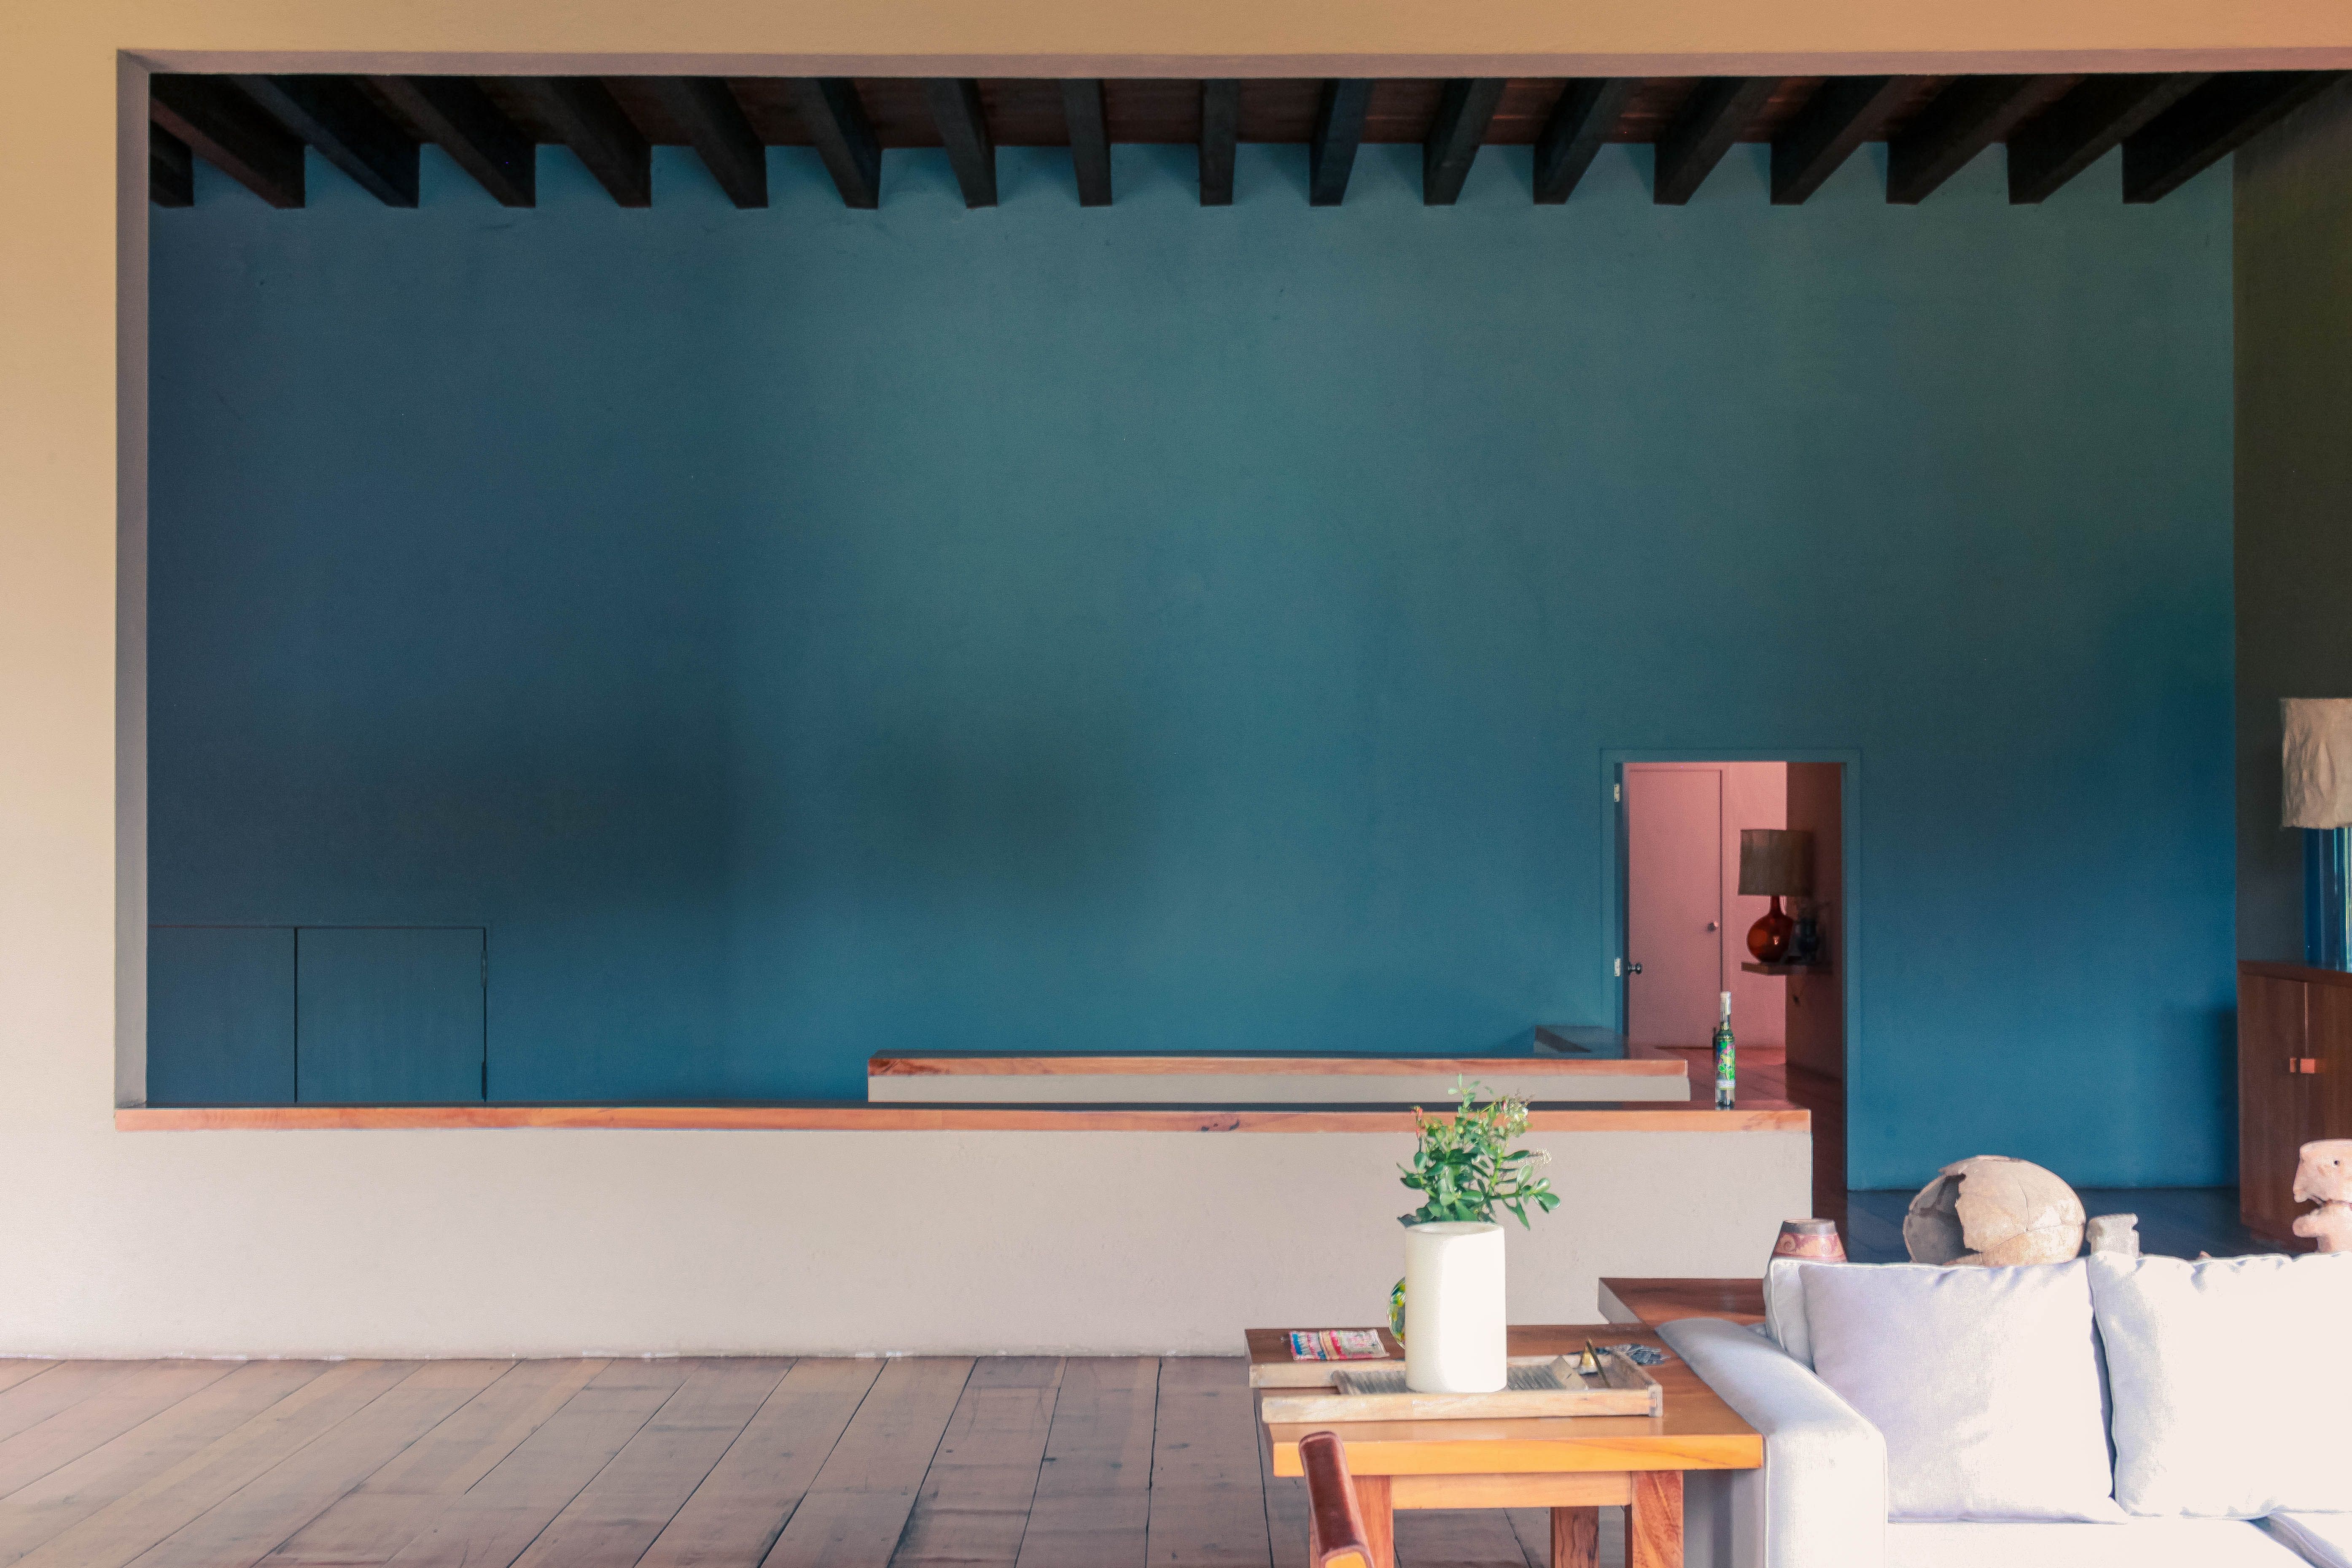 Casa Pedregal by Luis Barragan: Embracing Nature & Modernism